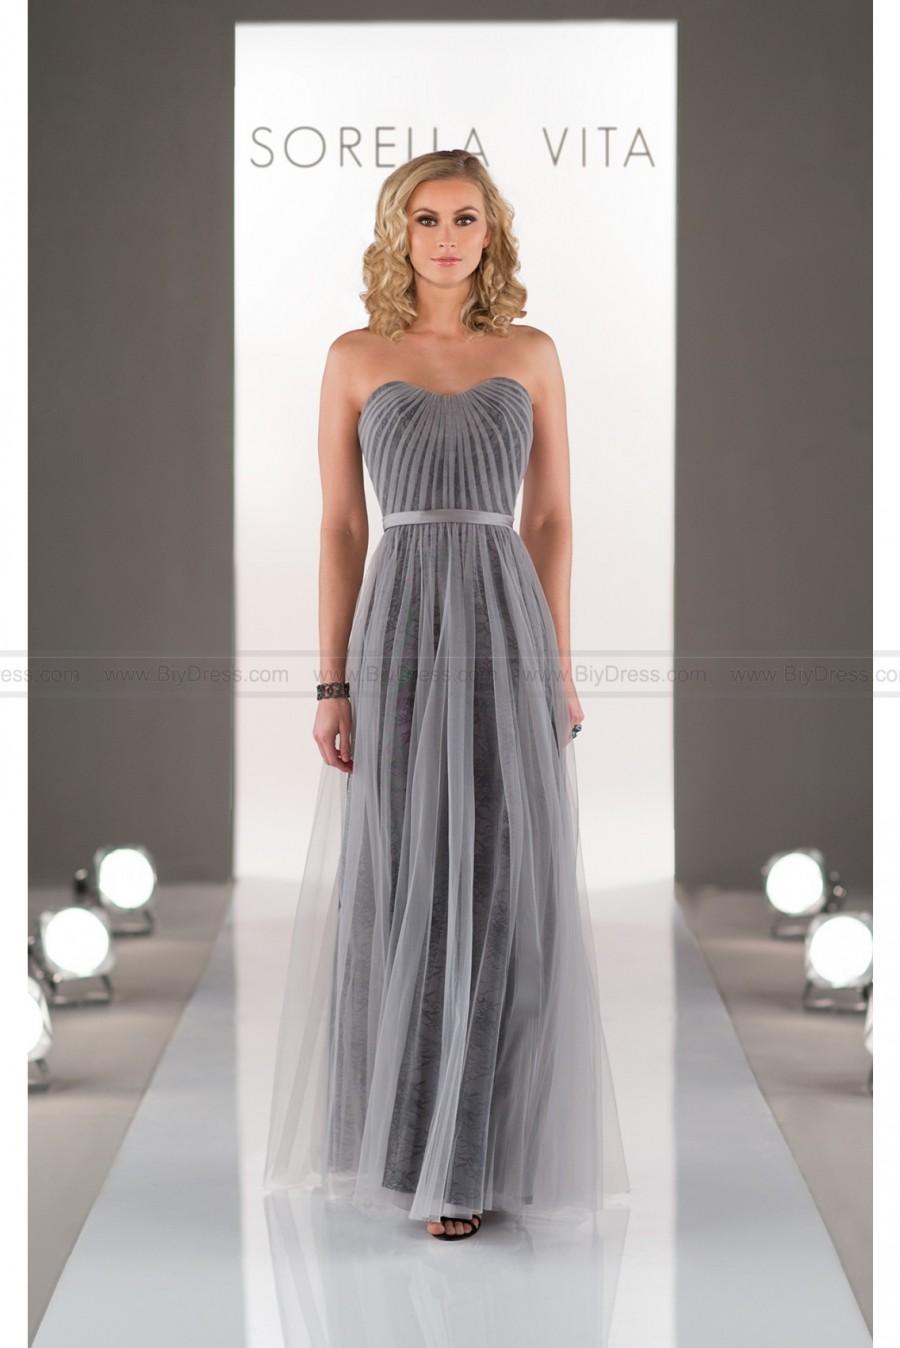 Mariage - Sorella Vita Sheath Bridesmaid Dress In Tulle Style 8501